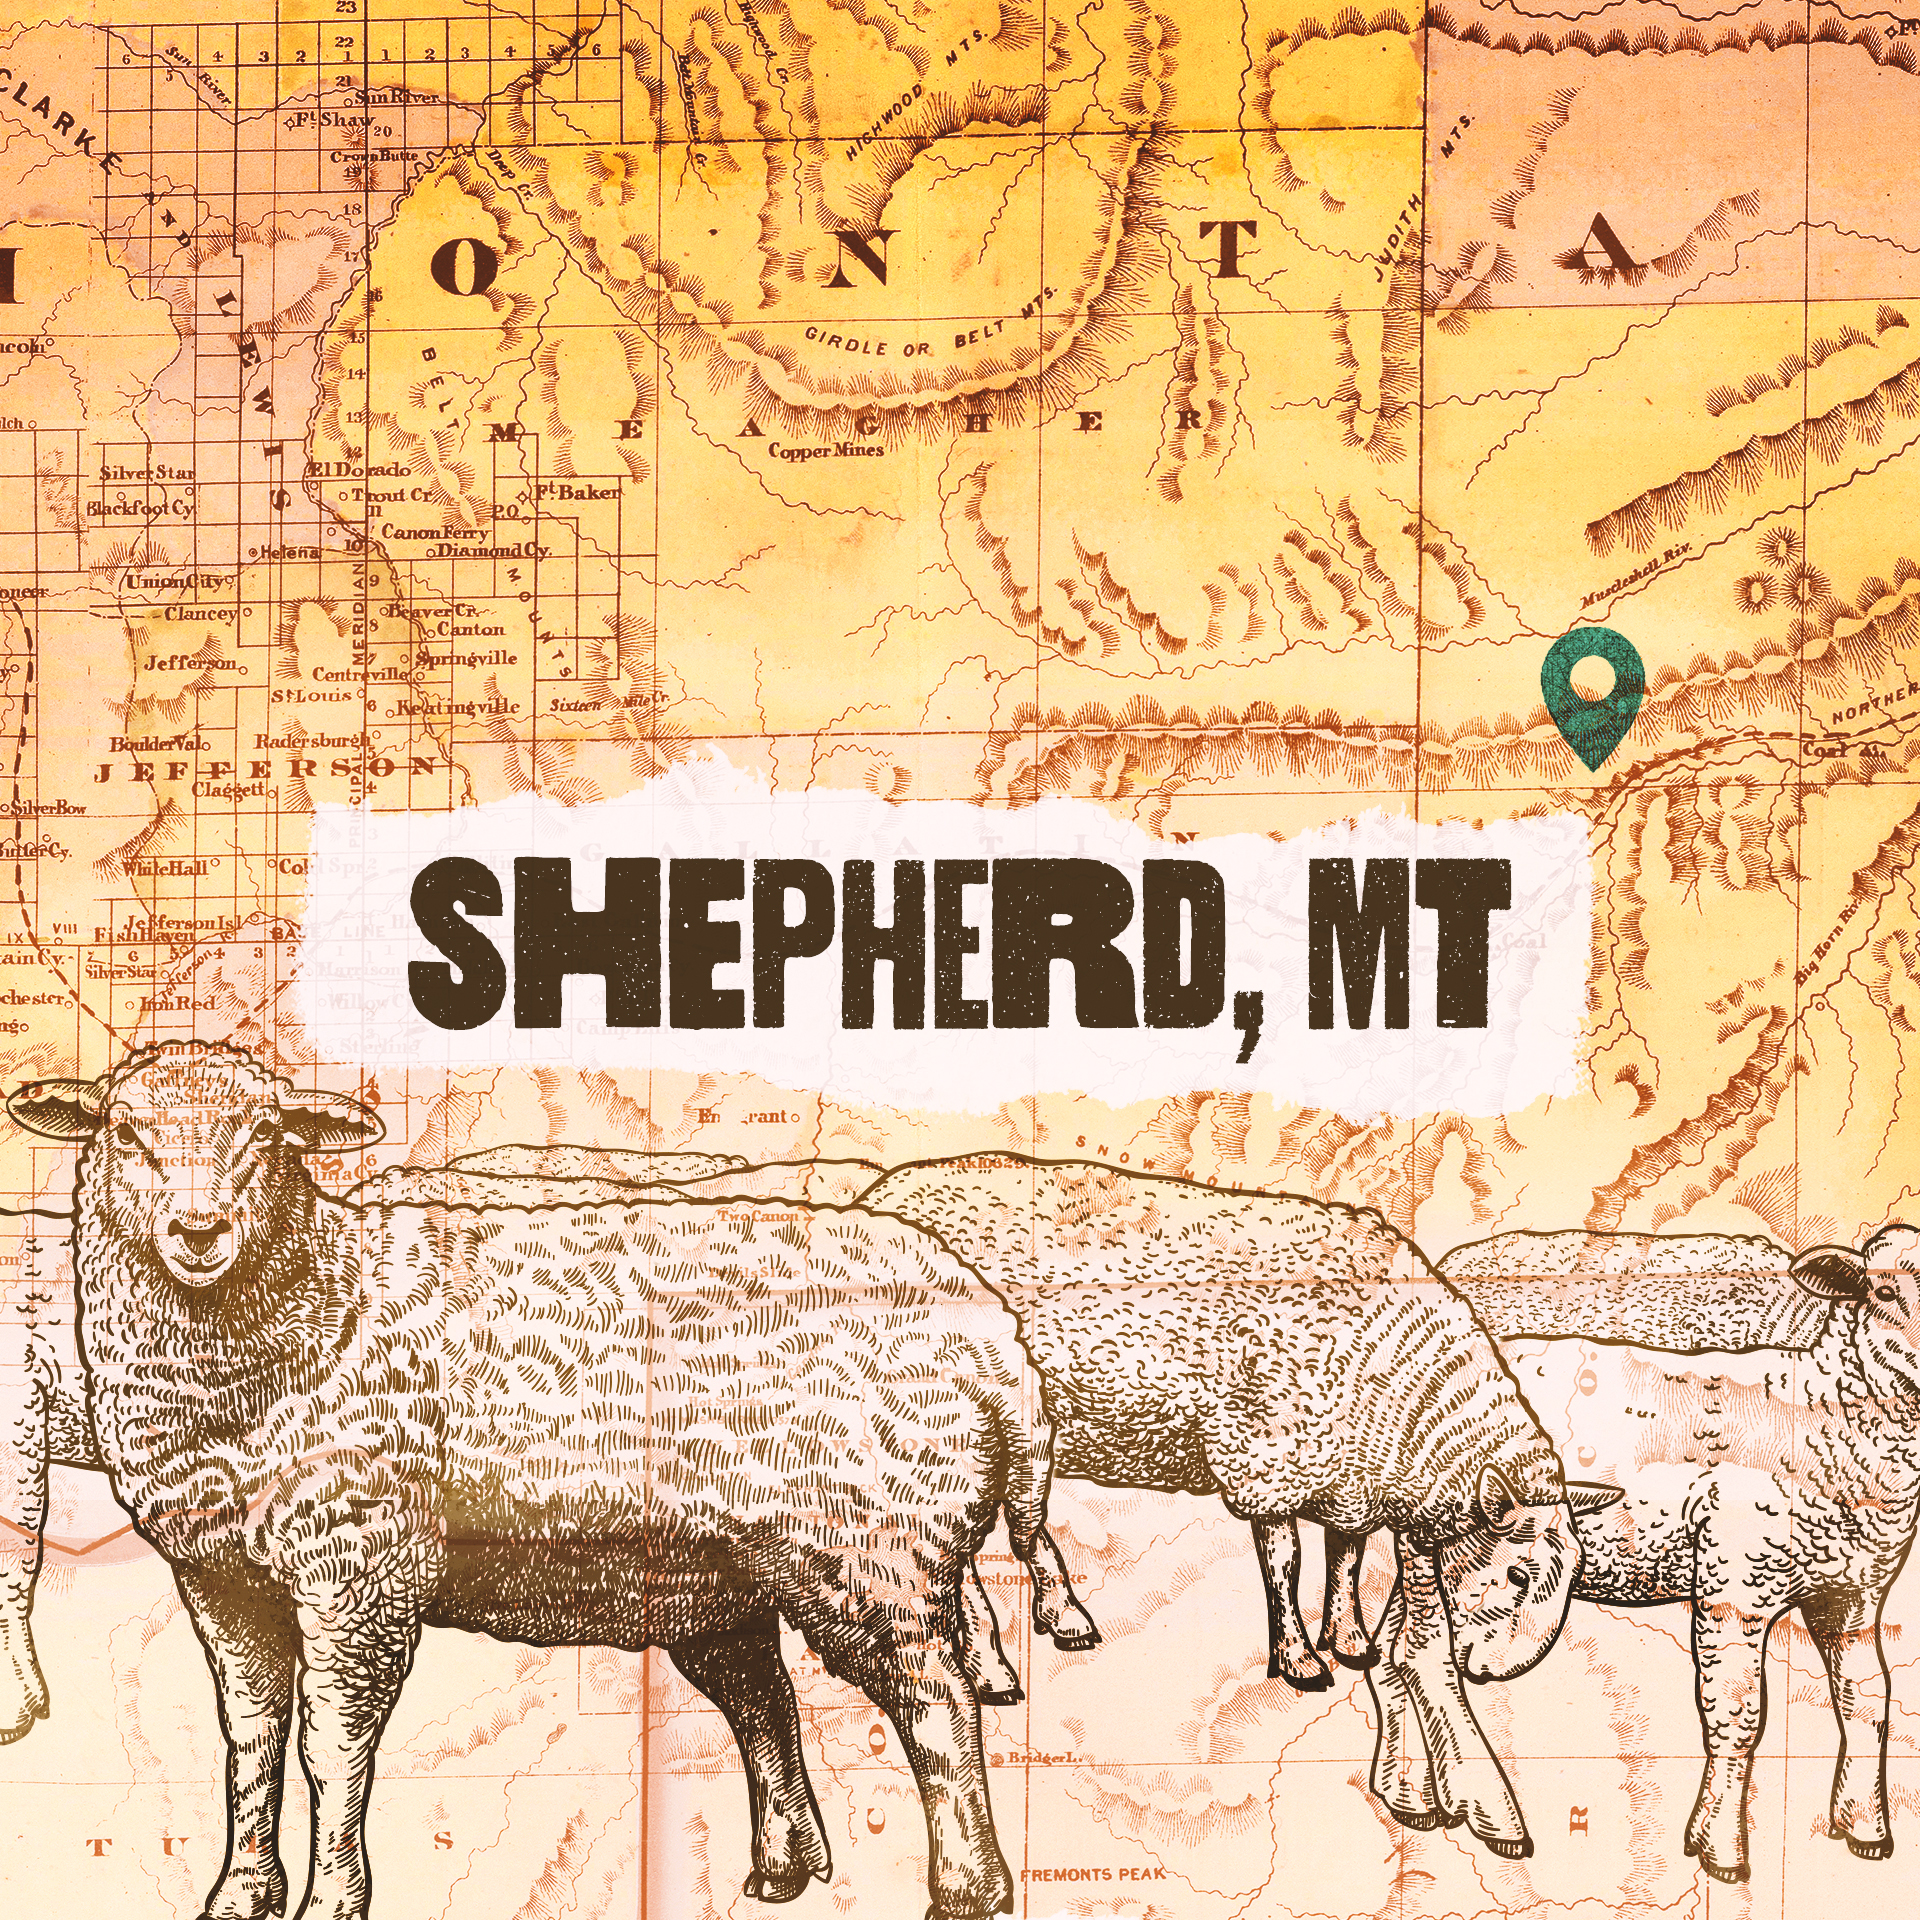 Shepherd, MT #1: John 21 - Feed My Sheep